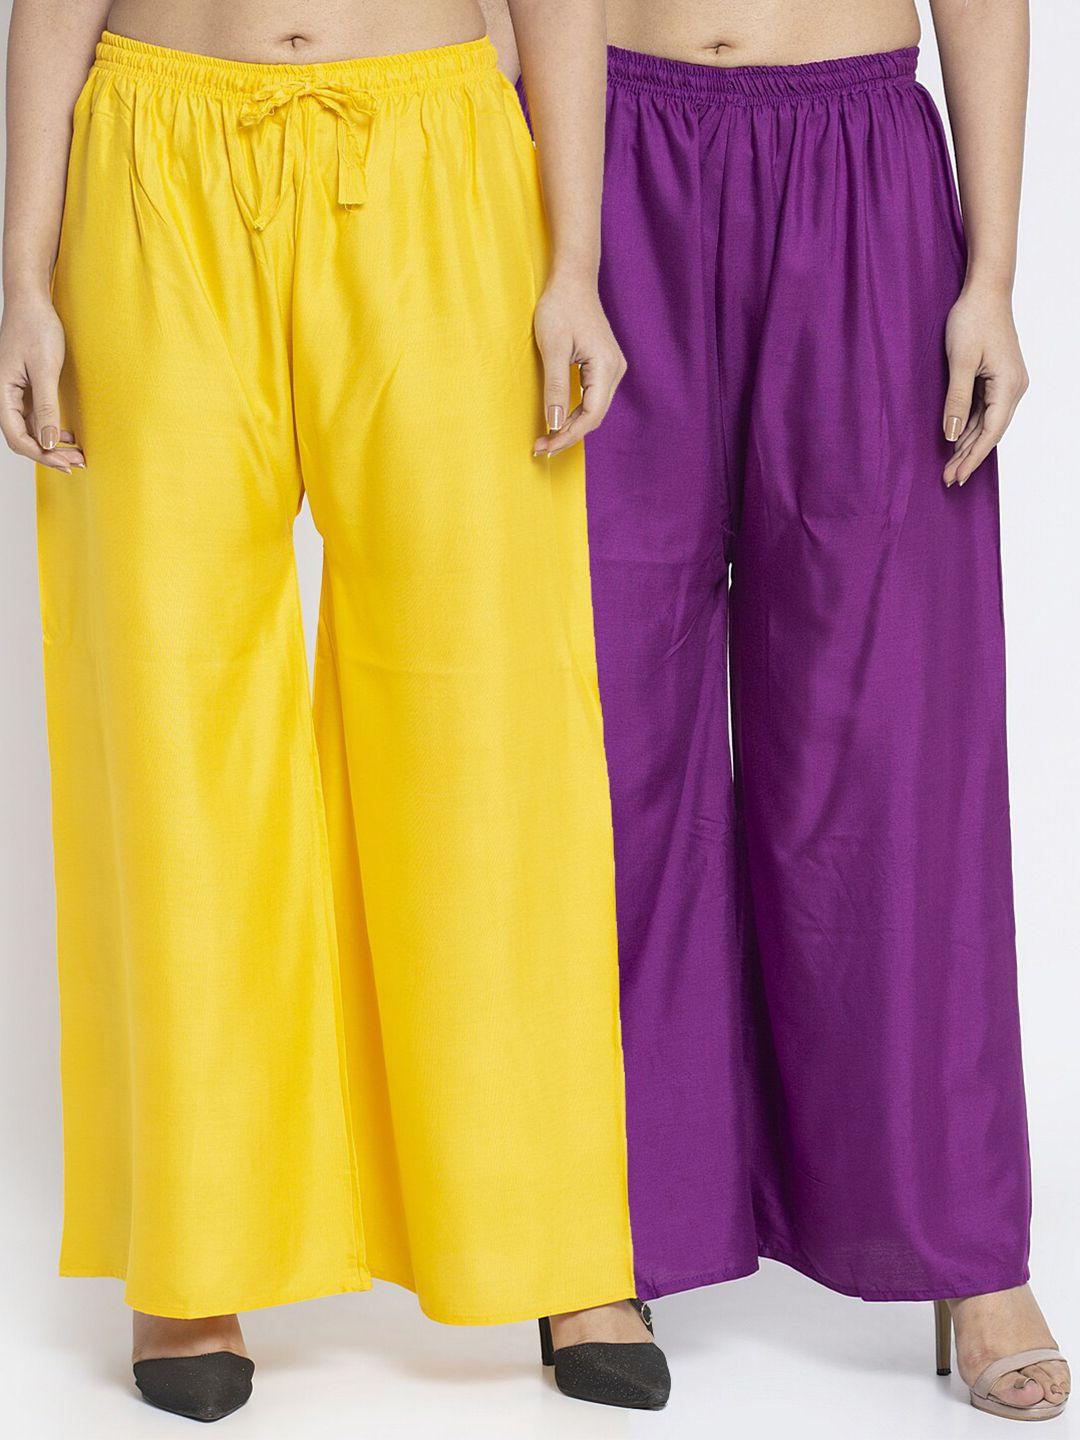 jinfo women pack of 2 yellow & purple knitted ethnic palazzos